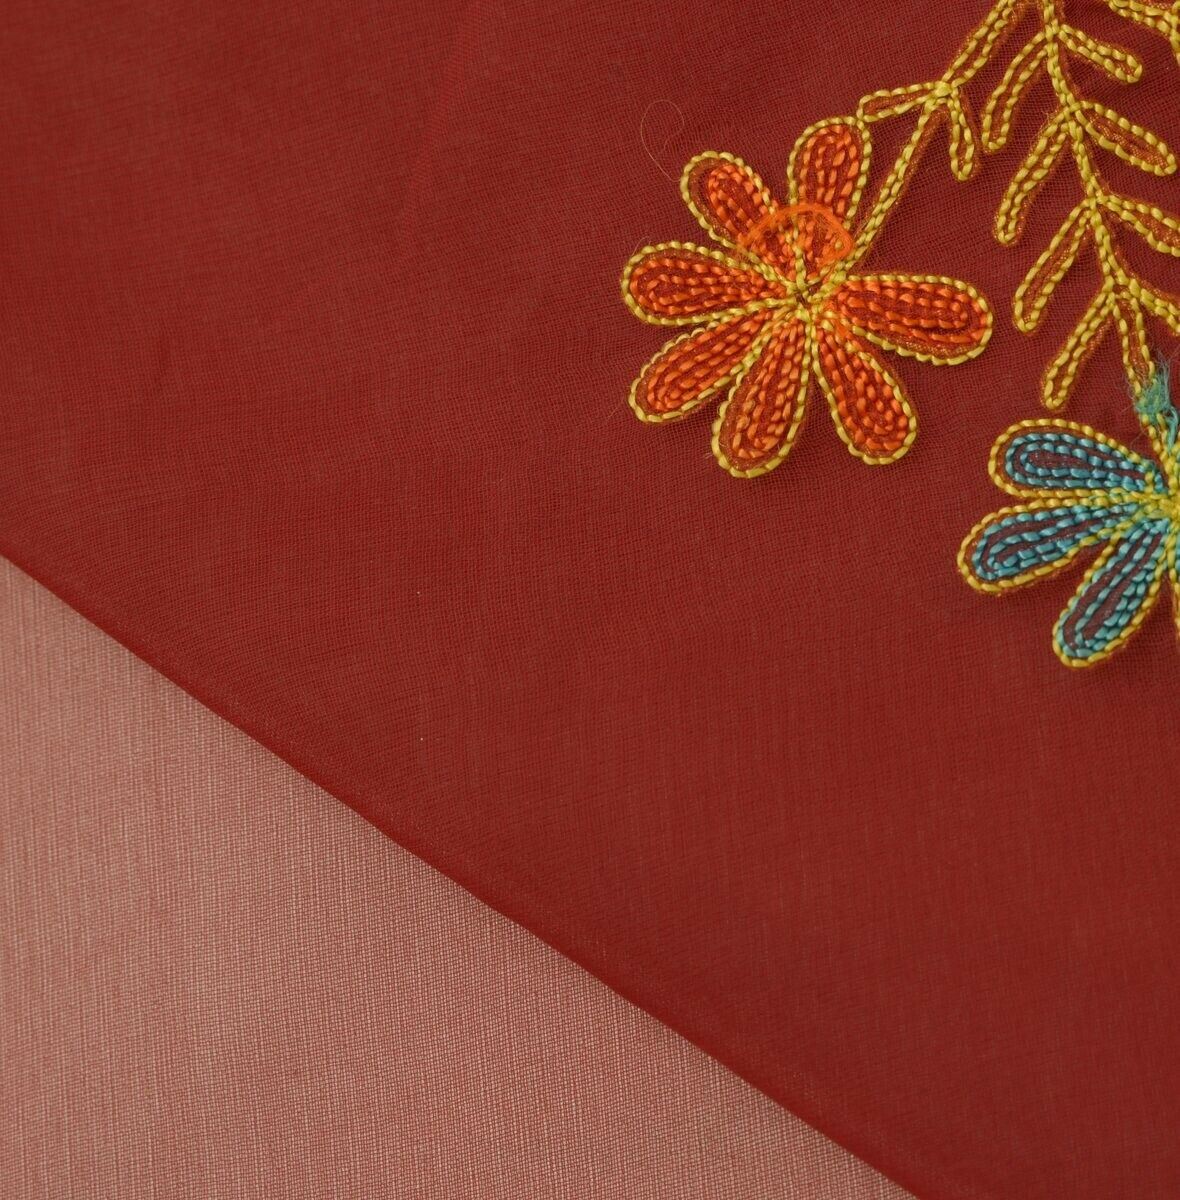 Blend Georgette Silk Maroon Vintage Sari Remnant Scrap Fabric for Sewing Craft